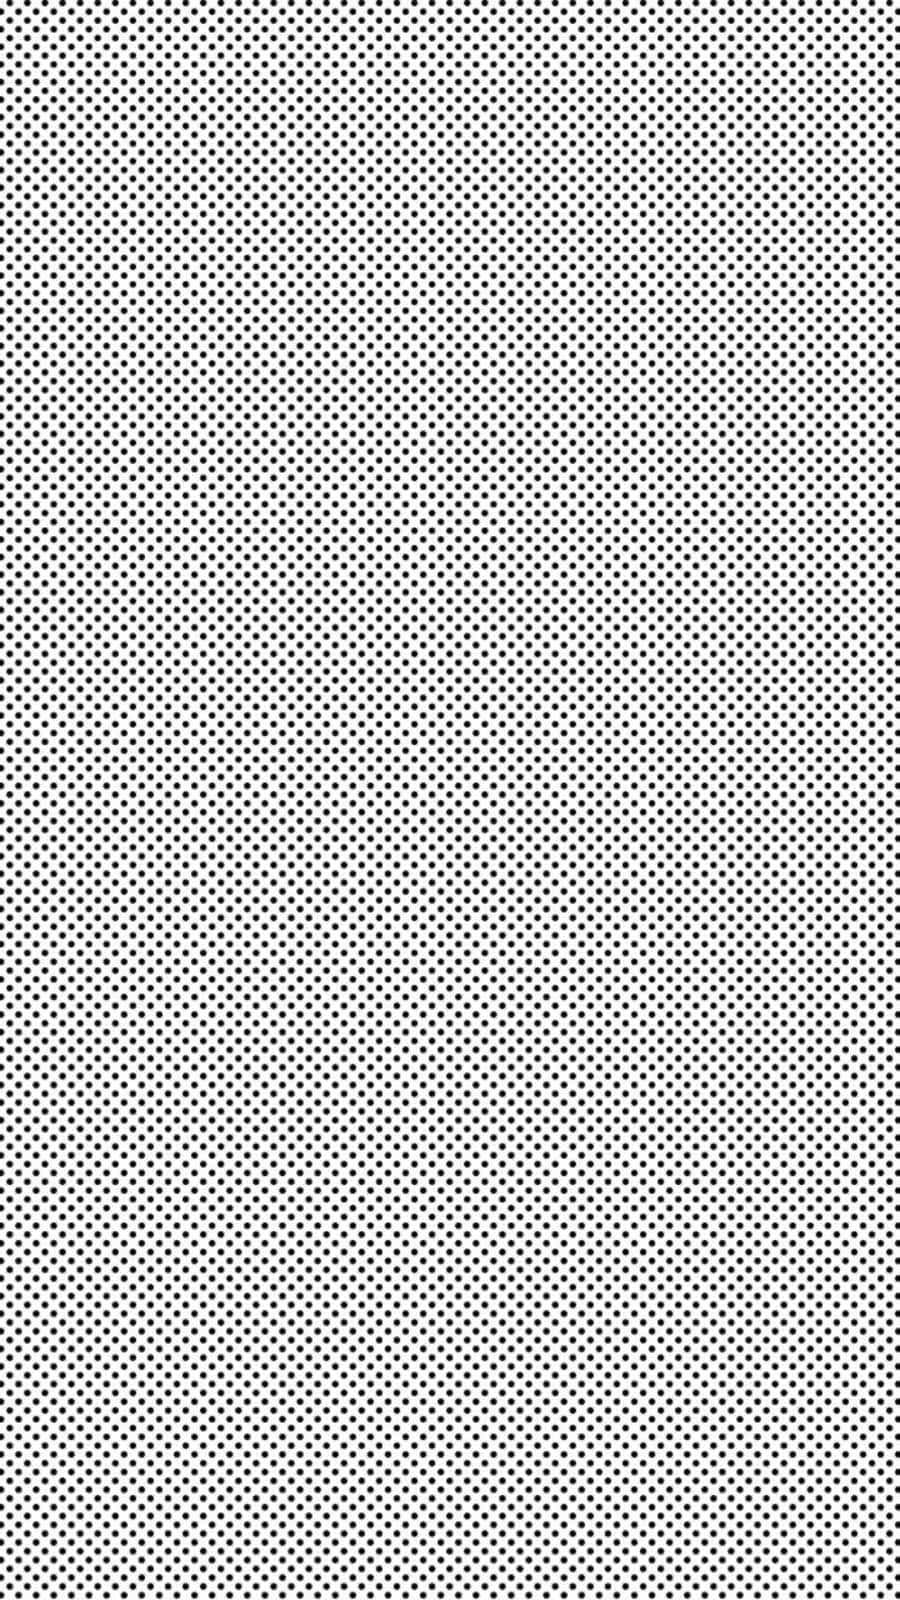 Black and White Dots Pattern Wallpaper Wallpaper